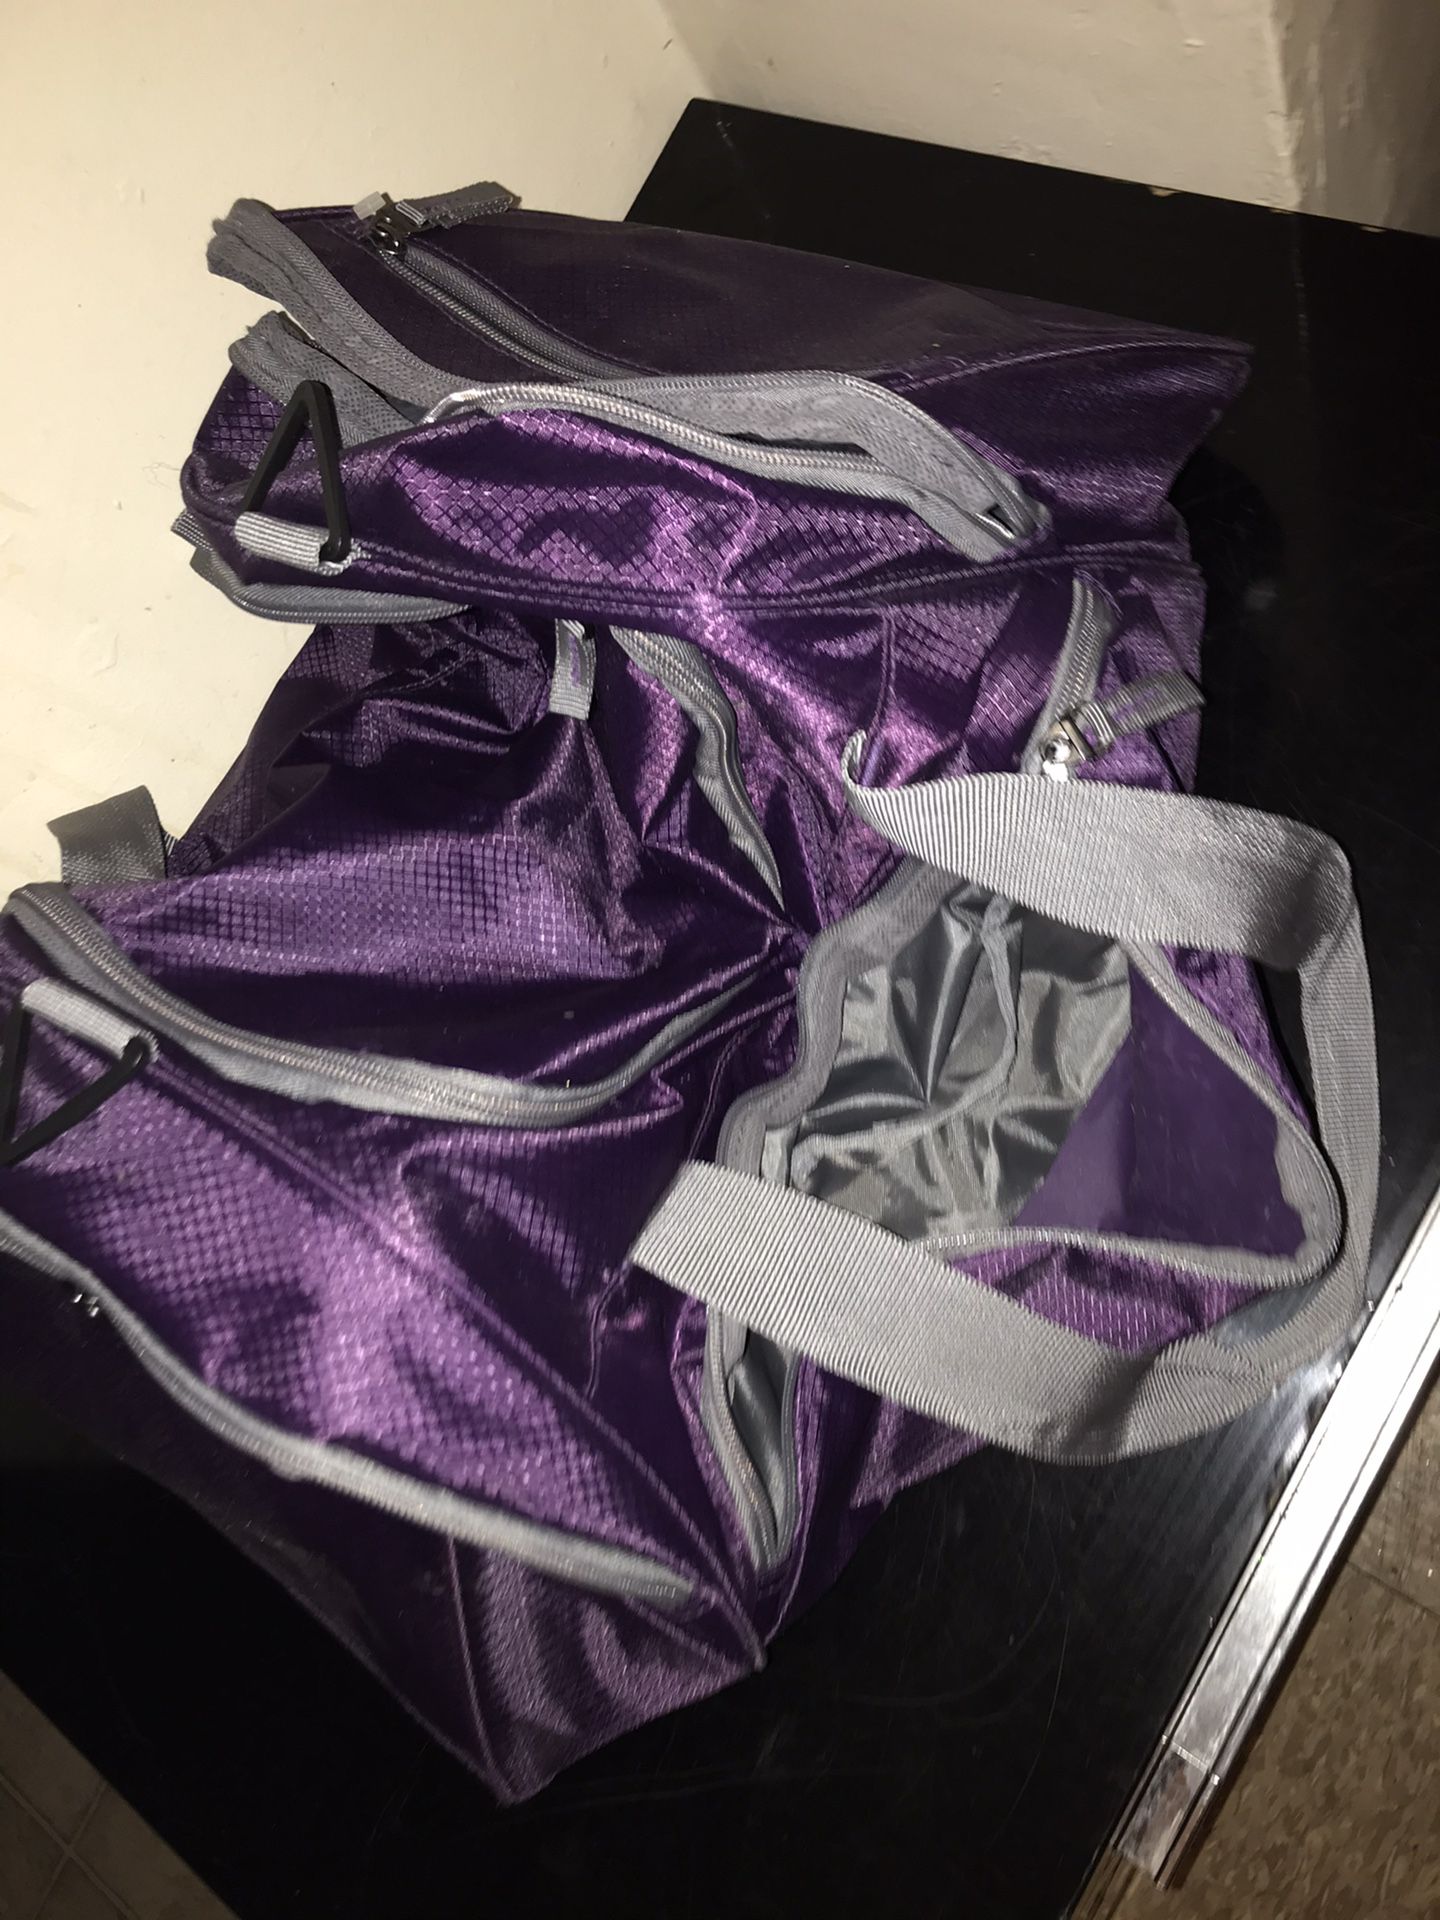 Purple duffel bag